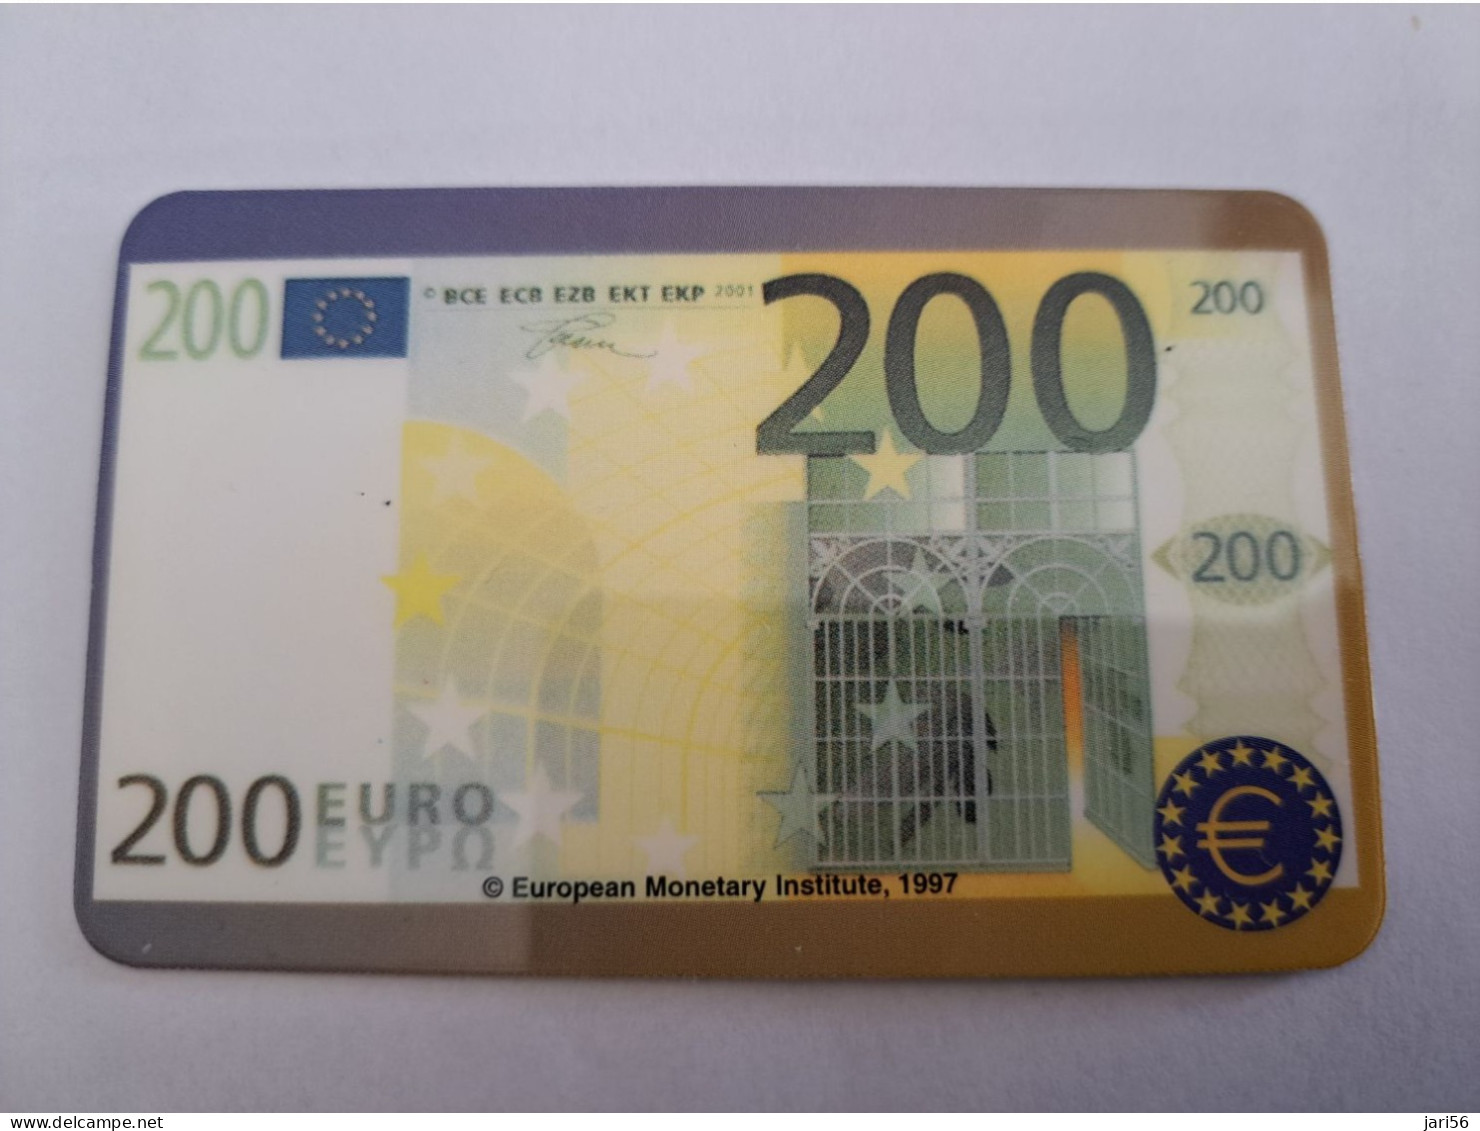 GREAT BRITAIN   20 UNITS   / EURO COINS/ BILJET 200 EURO    (date 09/ 98)  PREPAID CARD / MINT      **13305** - [10] Colecciones